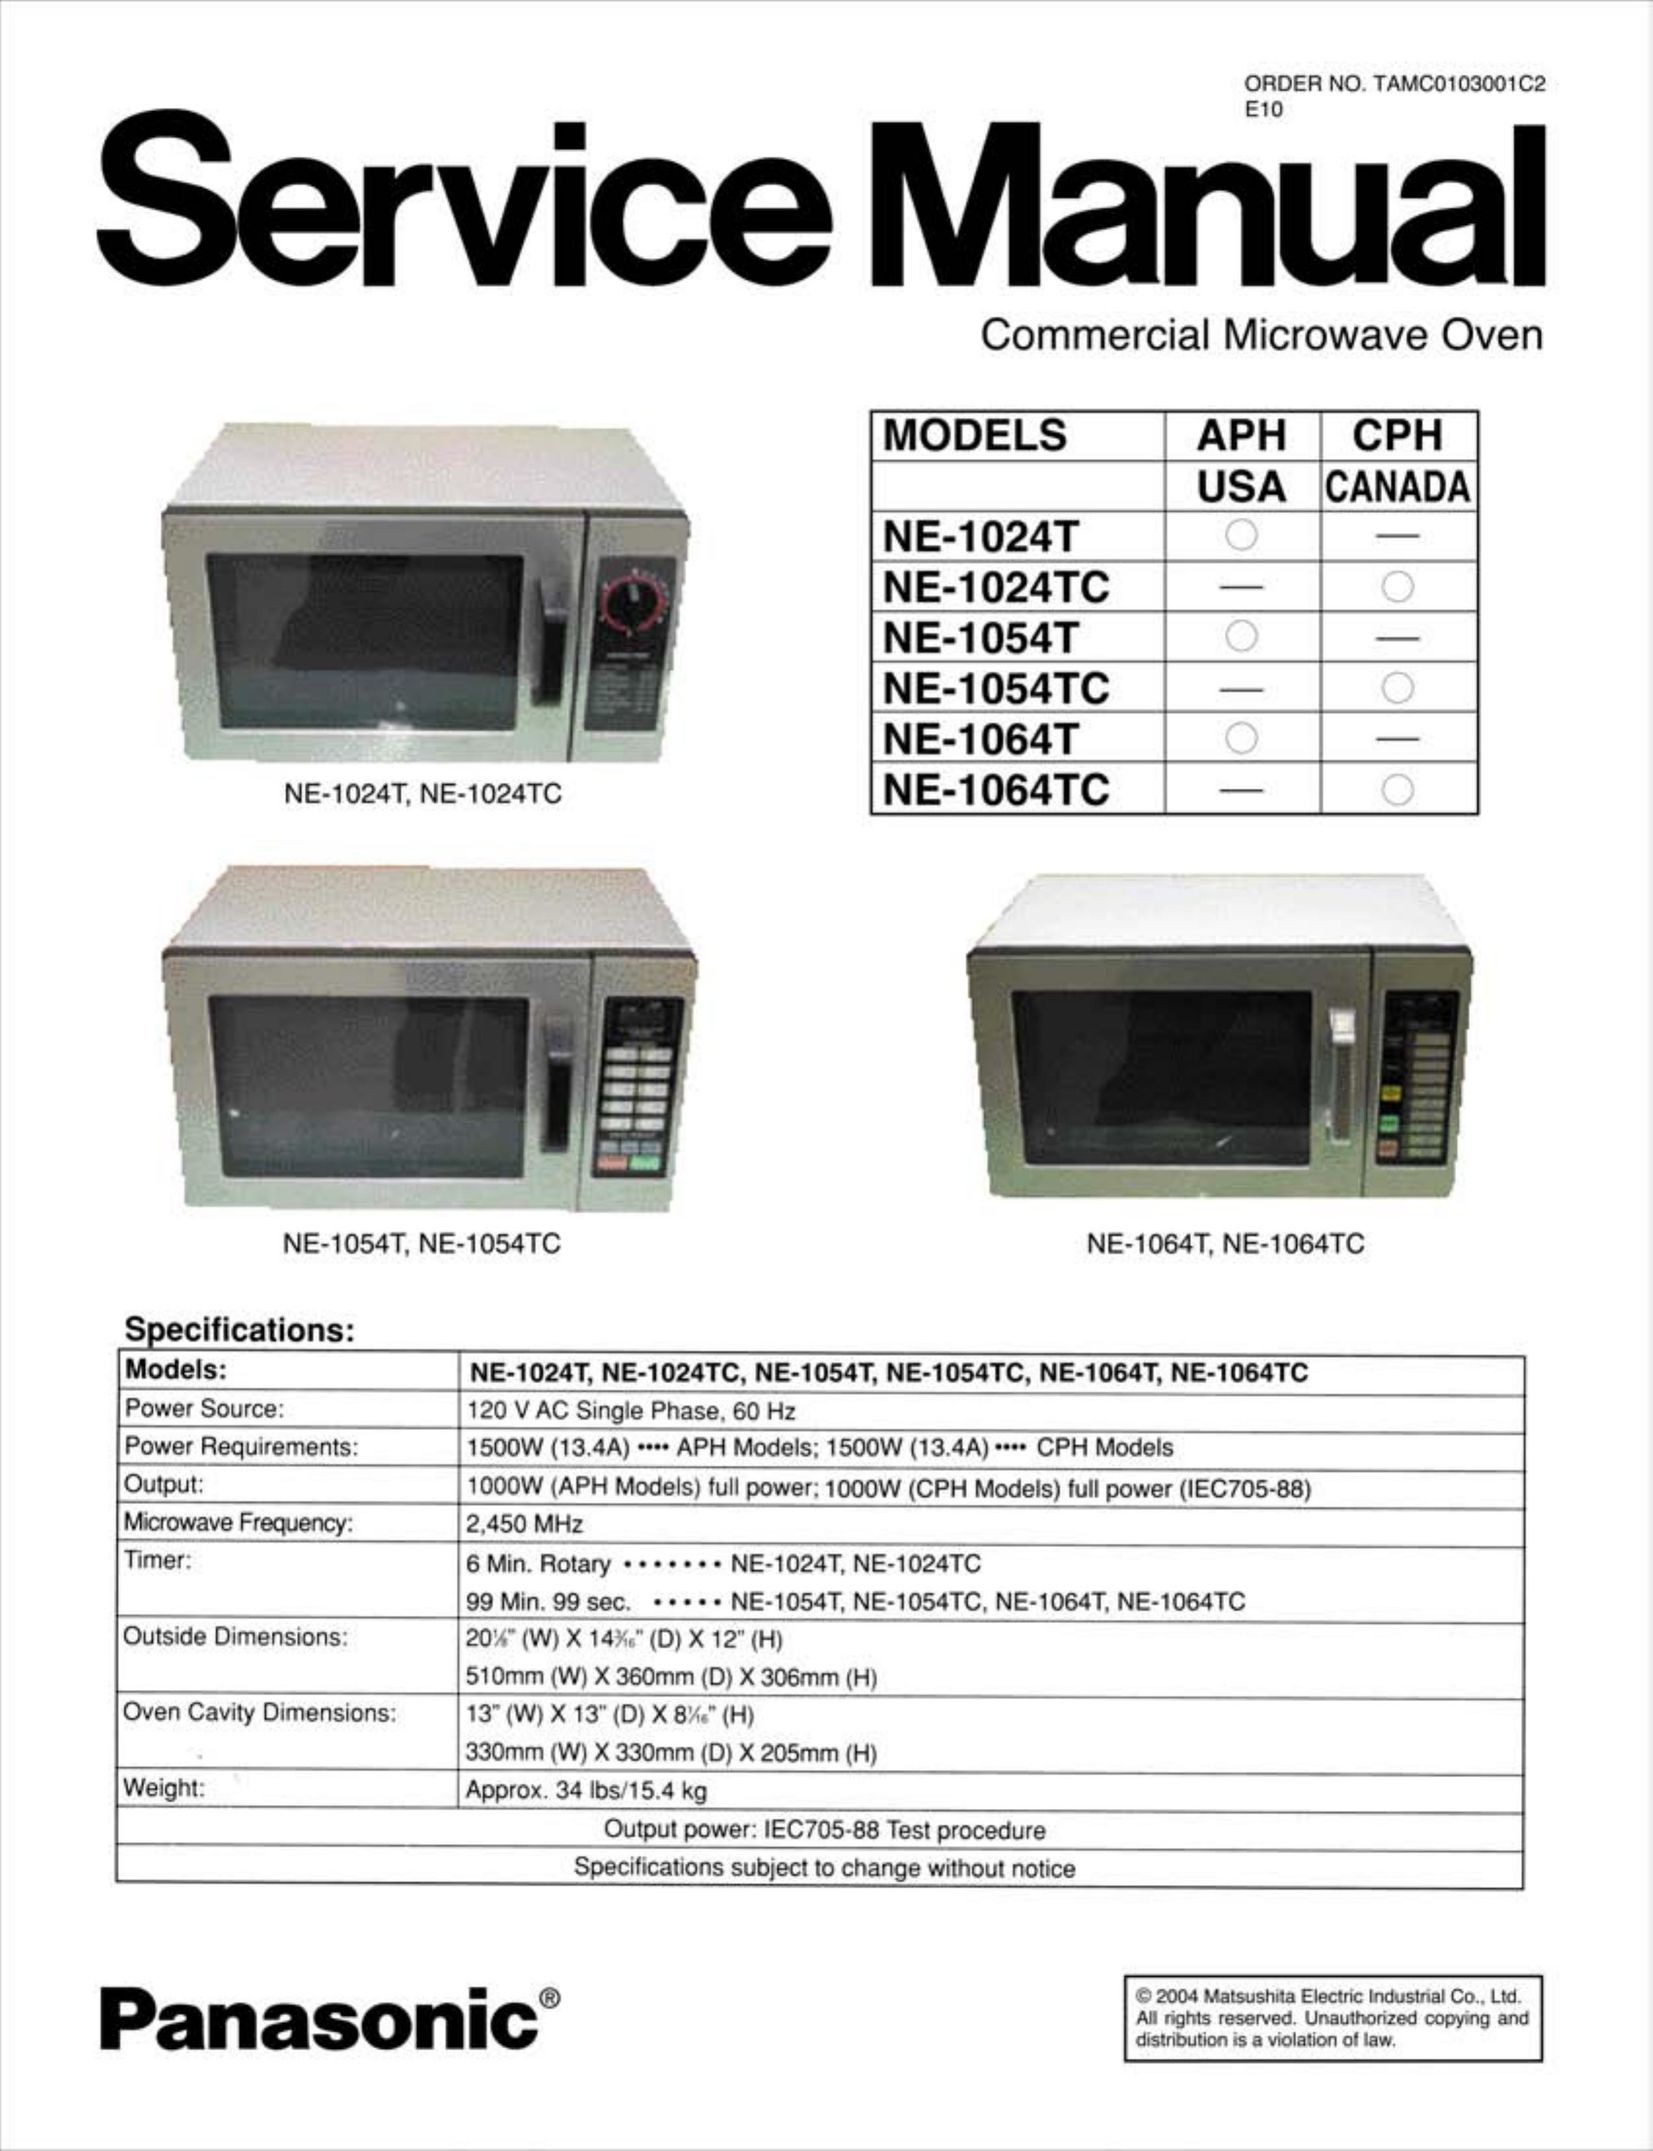 Panasonic NE-1064TC Microwave Oven User Manual